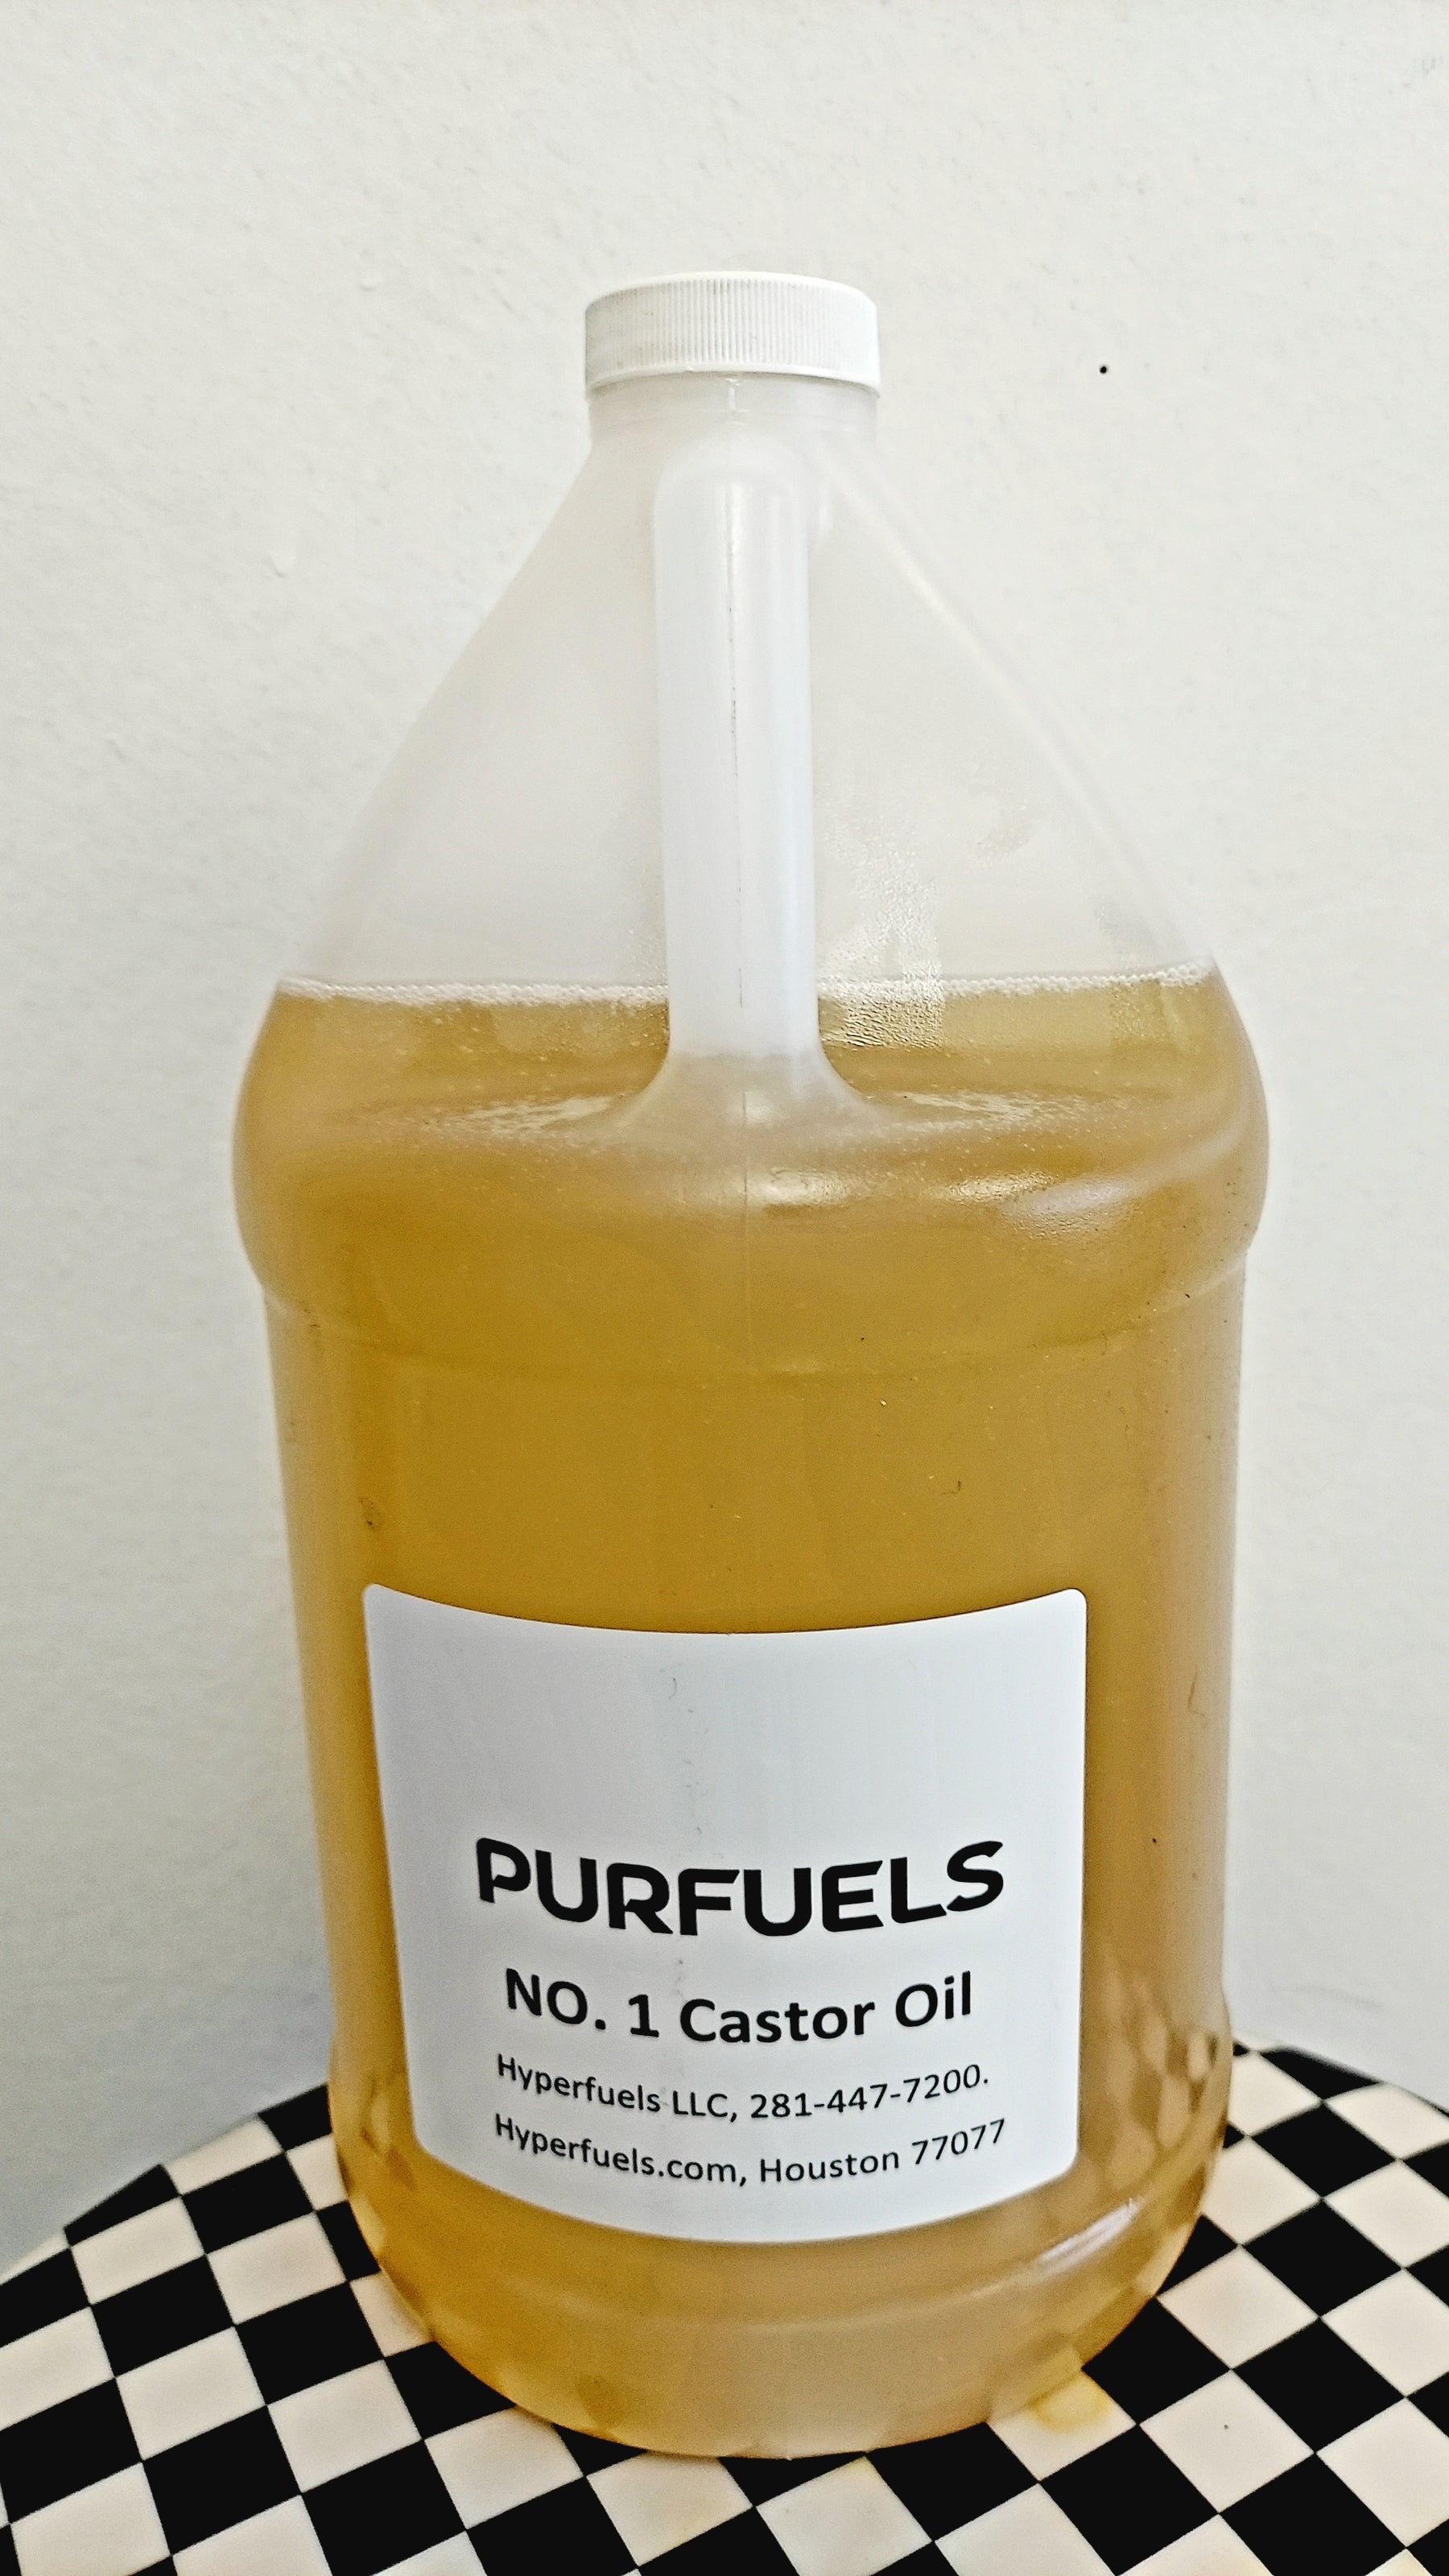 Purfuels Castor Oil (1 Gallon)